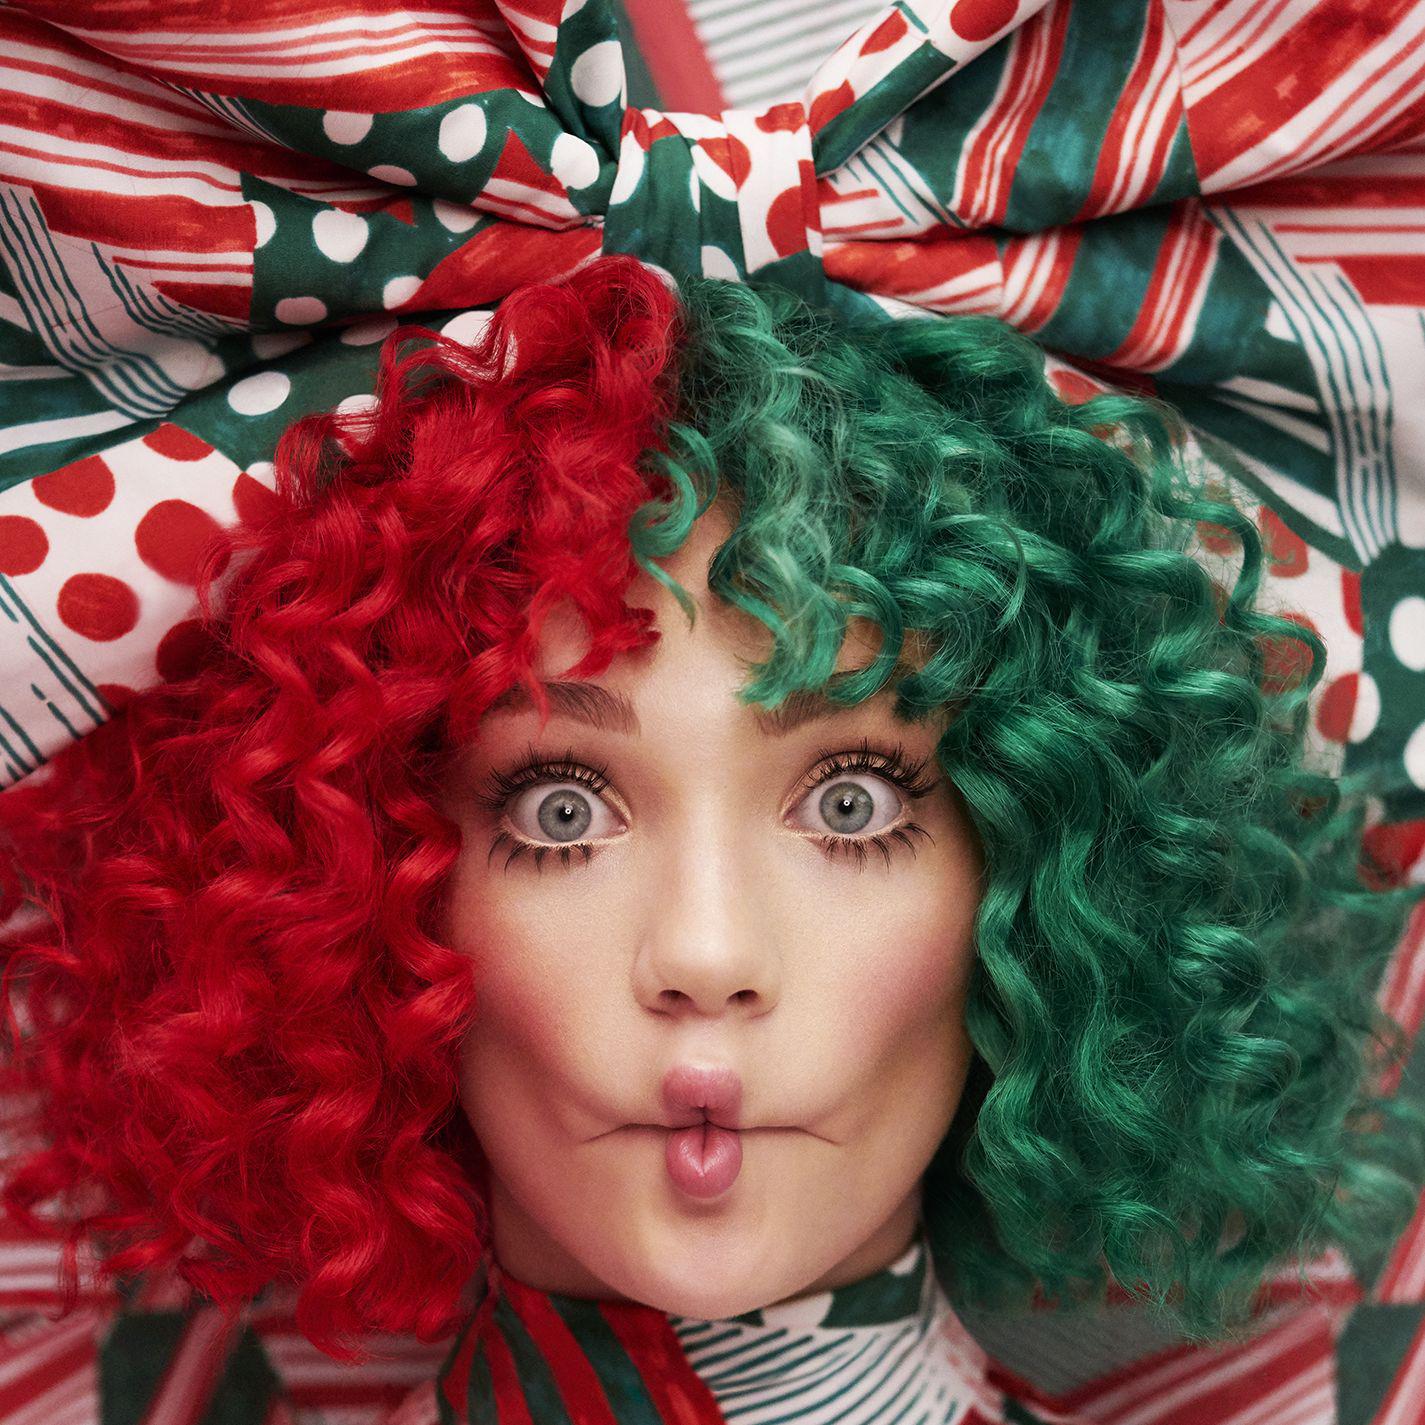 Underneath The Mistletoe歌词 歌手Sia-专辑Everyday Is Christmas-单曲《Underneath The Mistletoe》LRC歌词下载